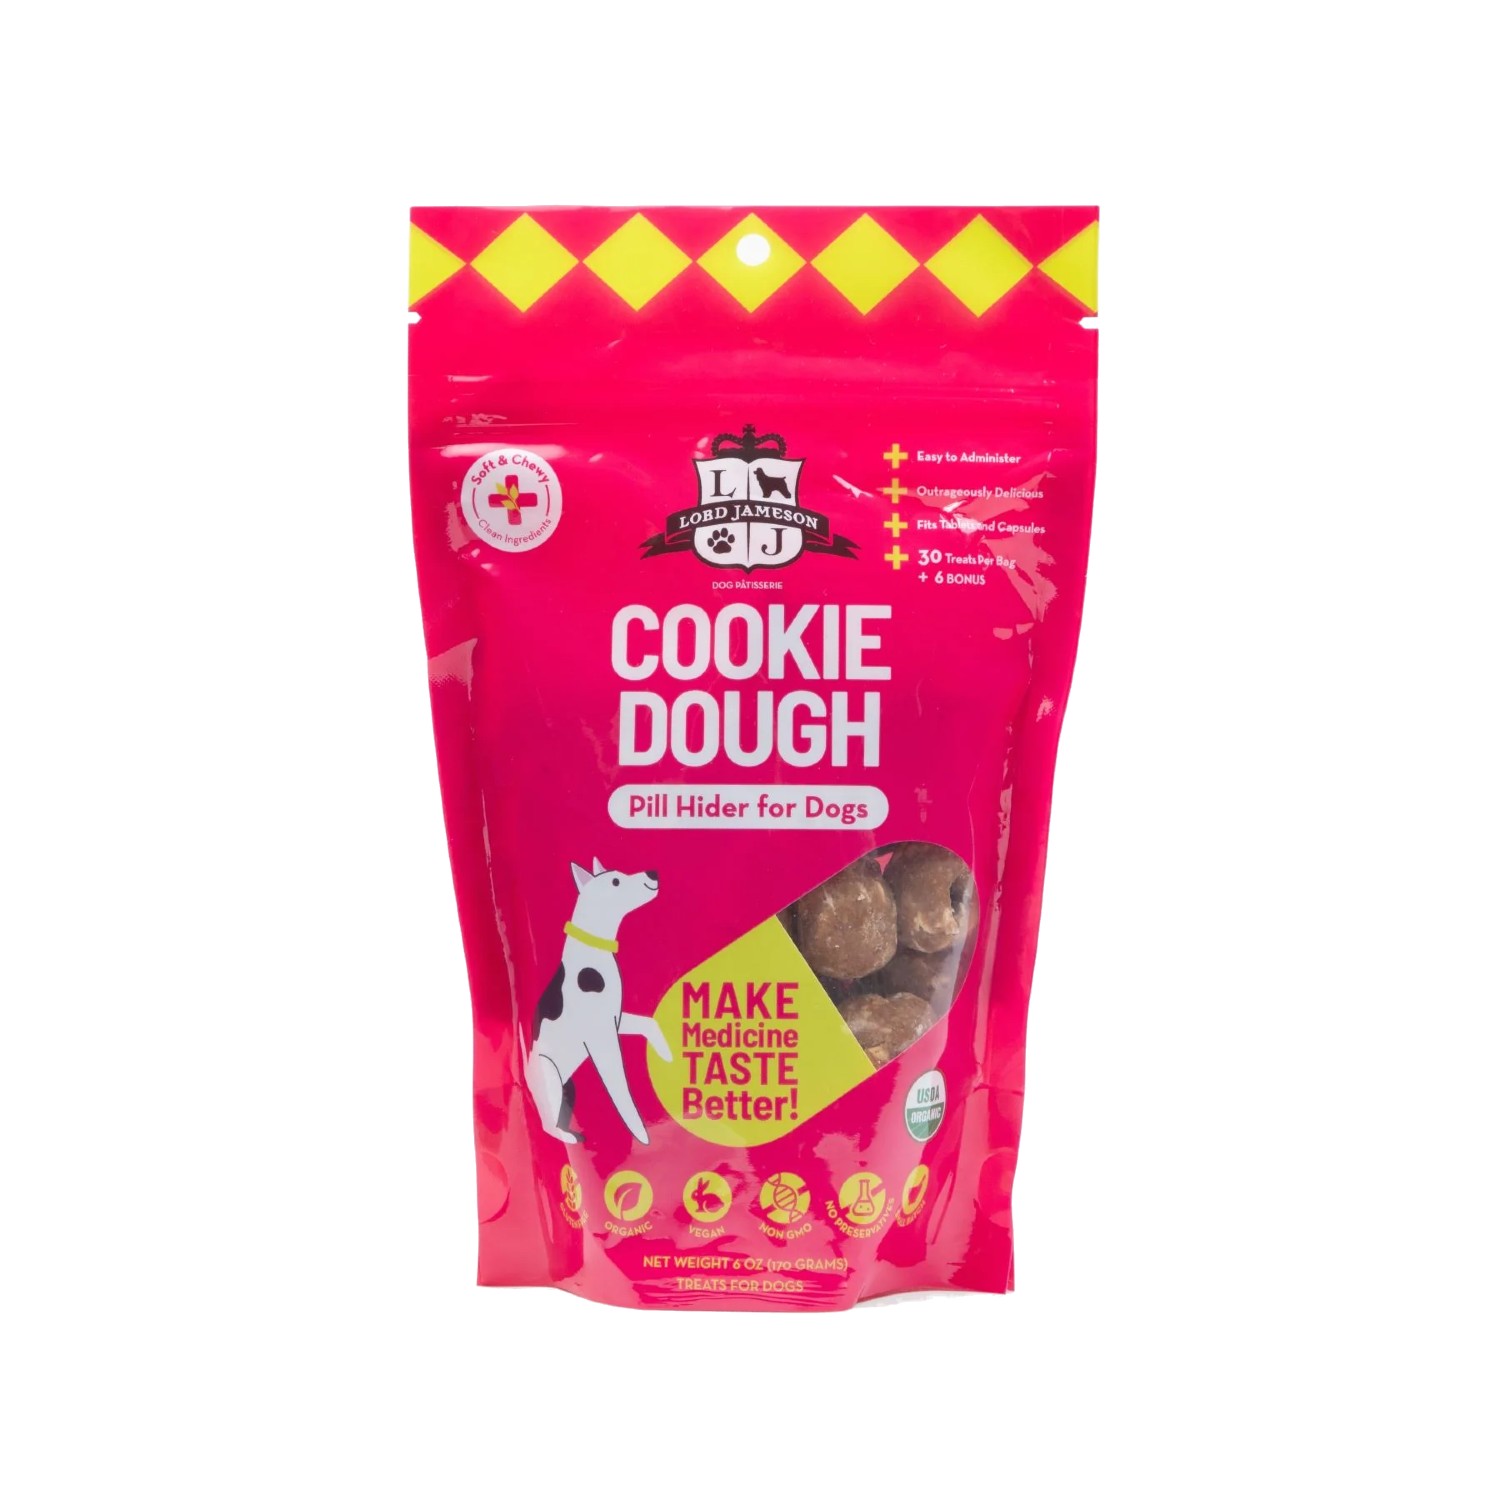 Lord Jameson Organic Pill Holder Dog Treats - Cookie Dough